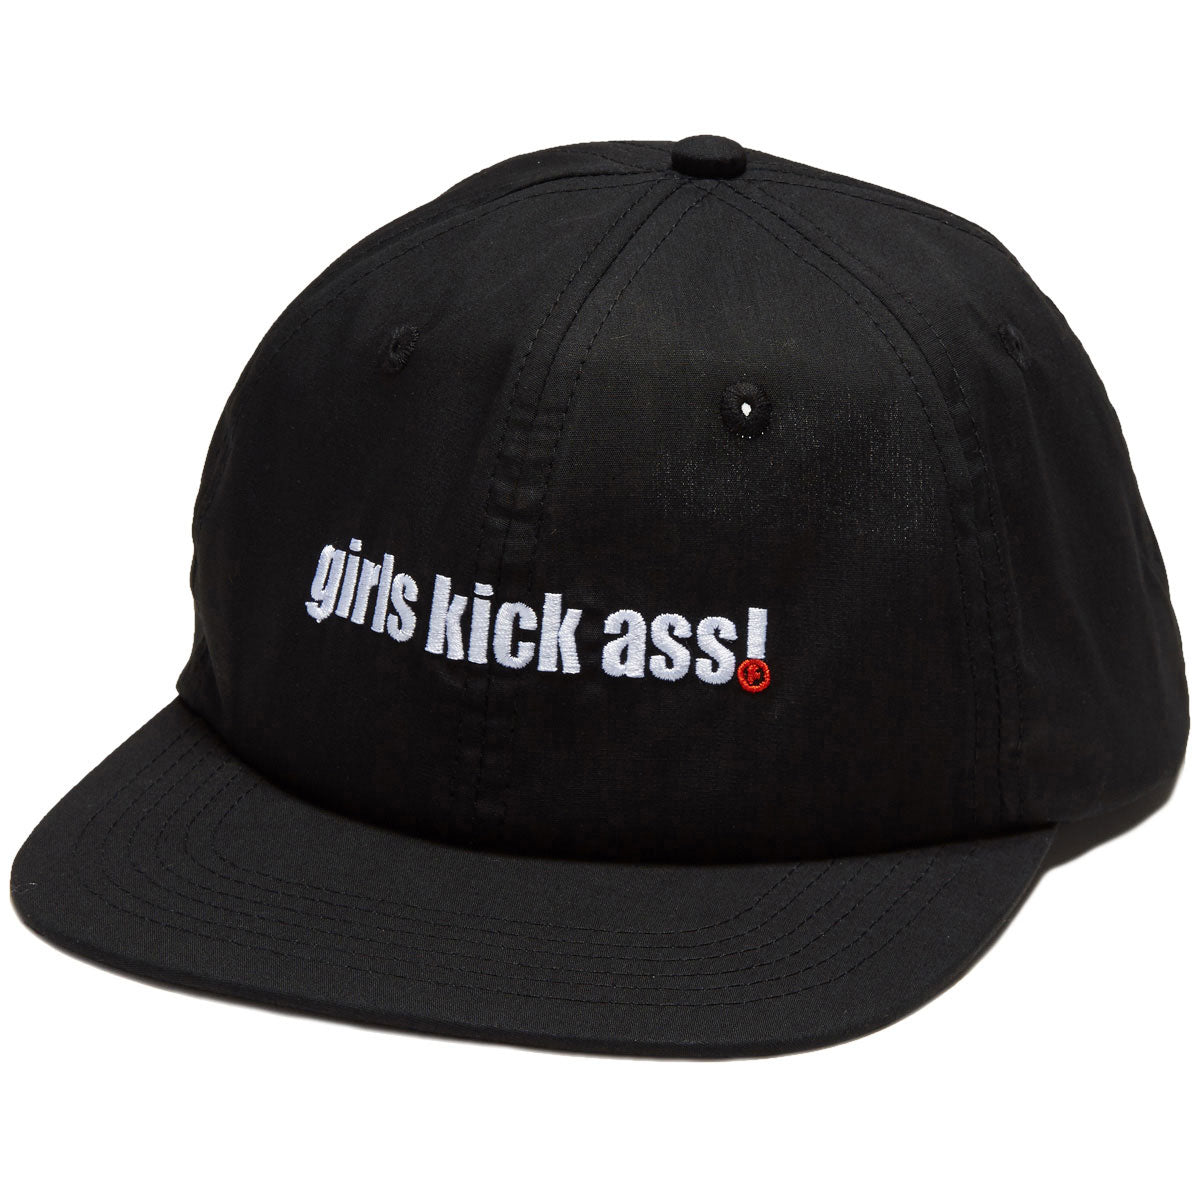 Foundation Girls Kick Ass Hat - Black image 1